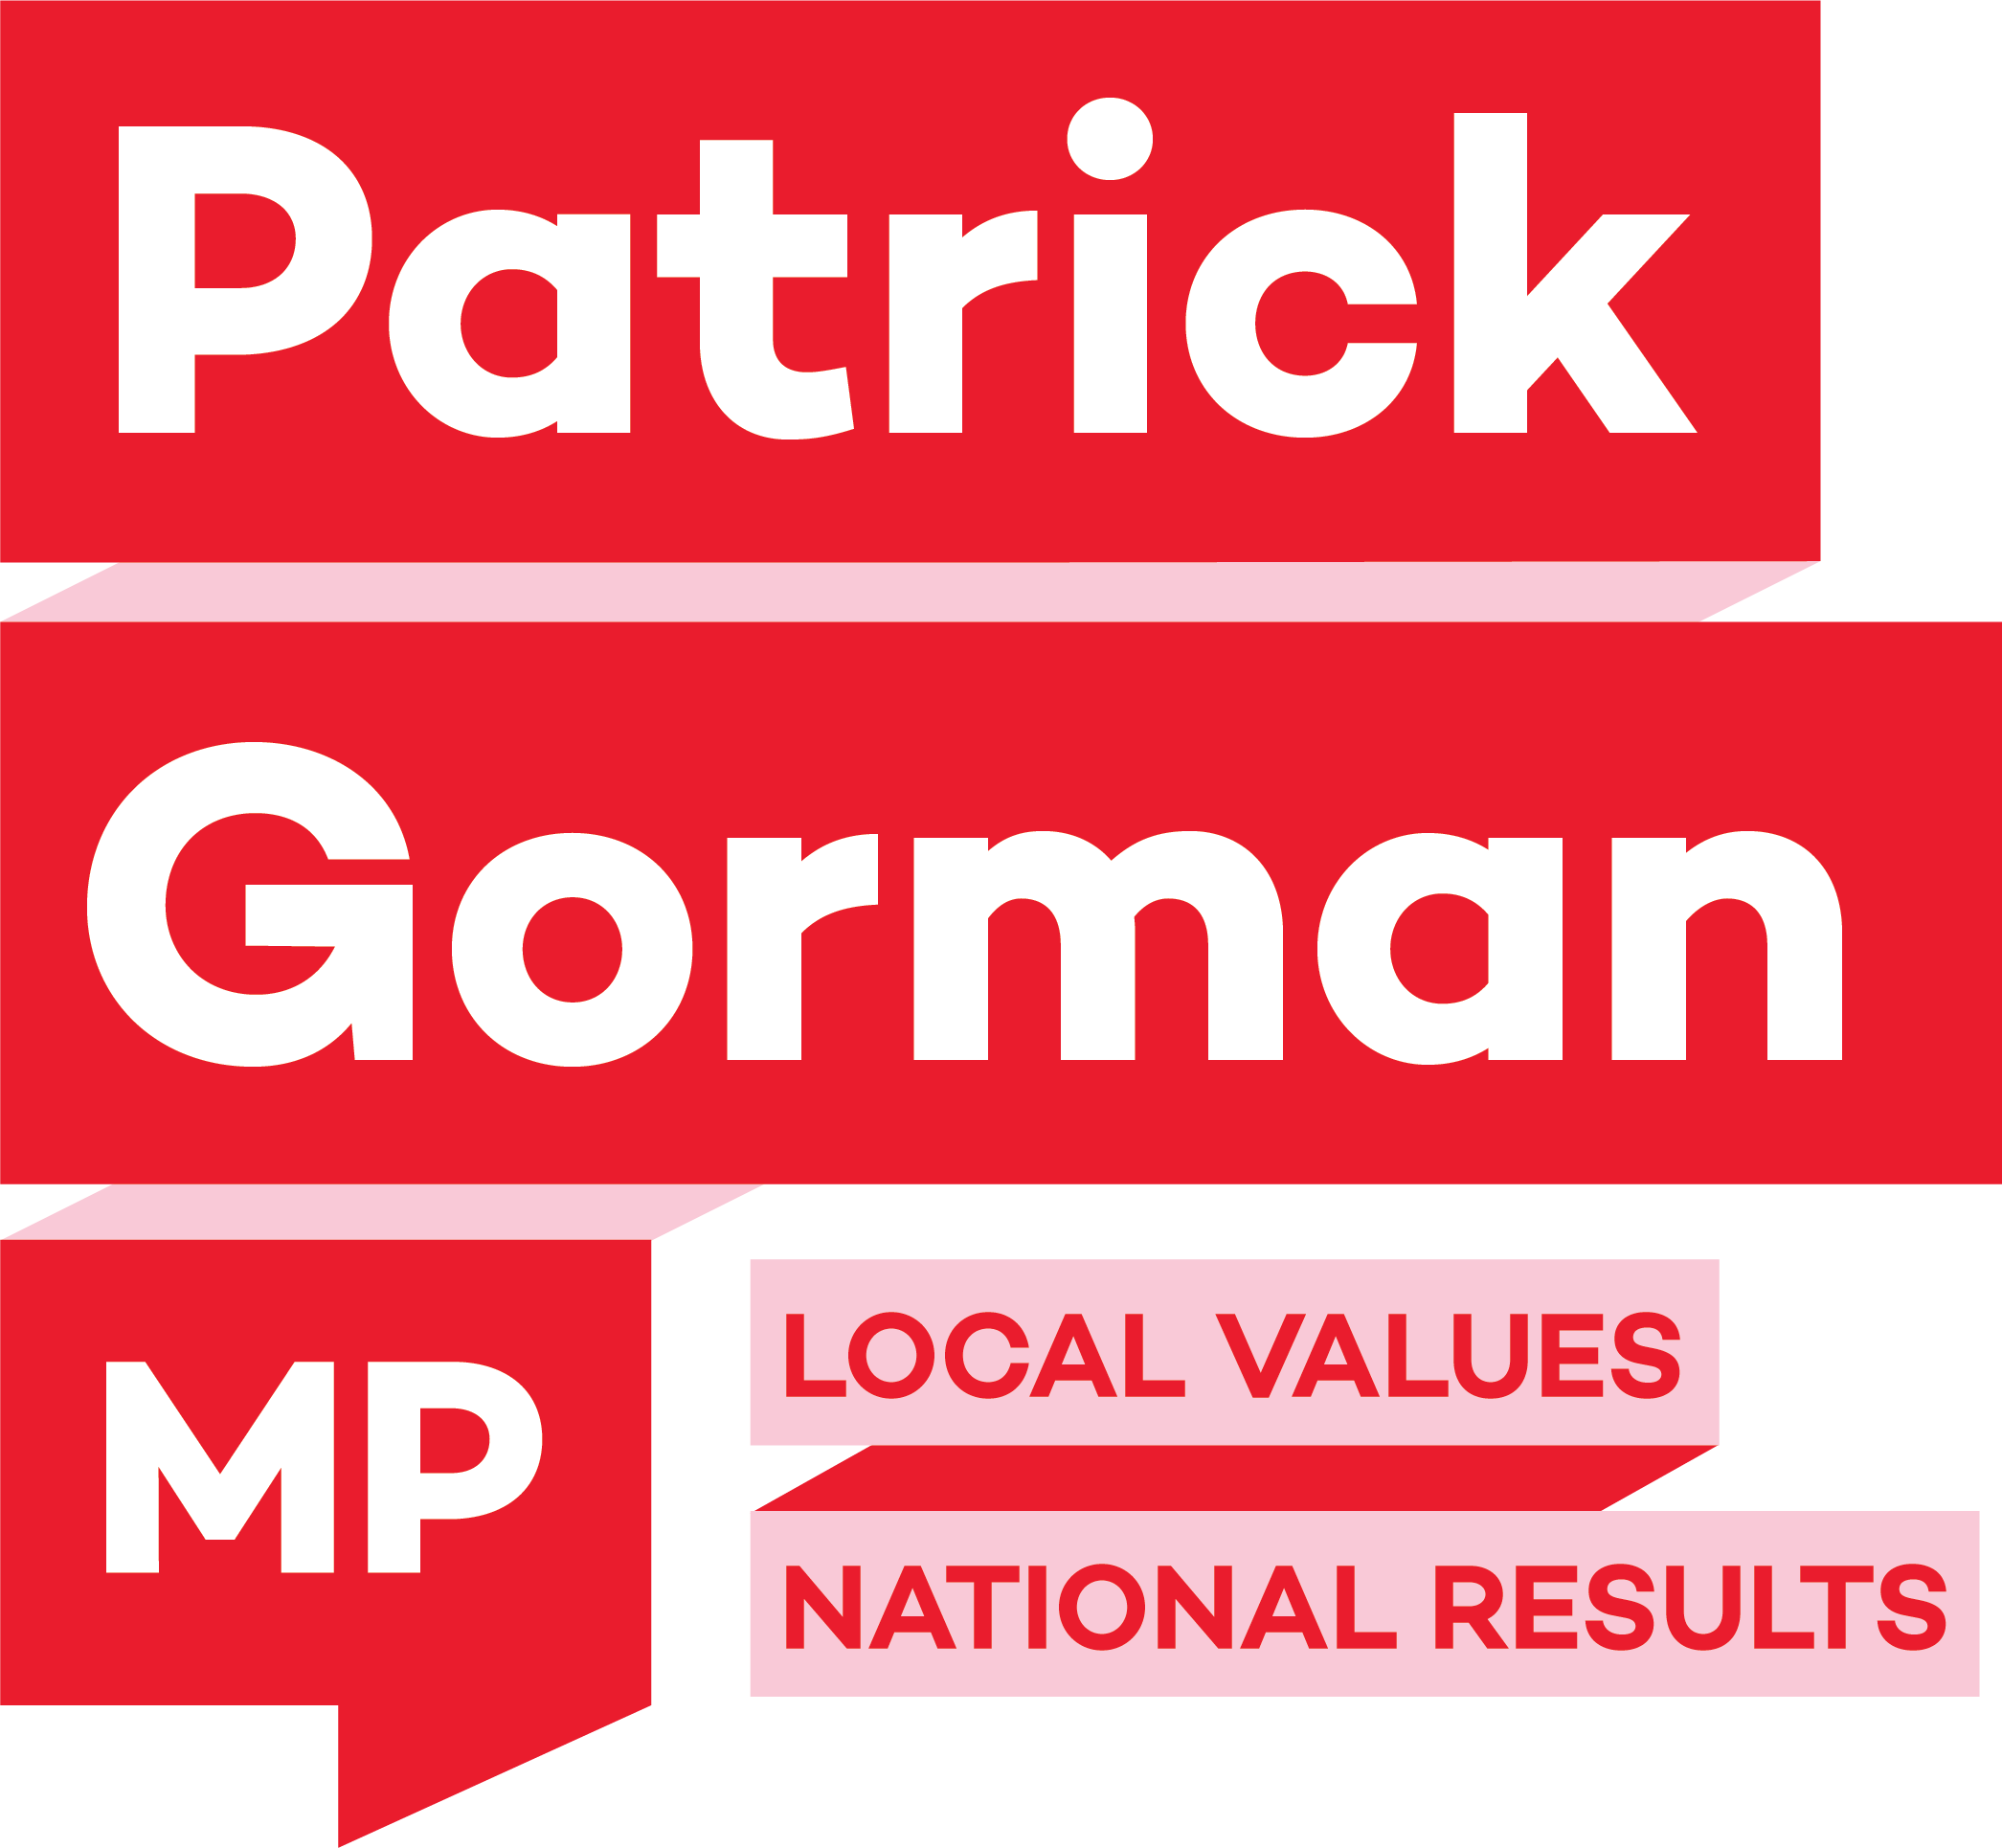 Patrick Gorman MP